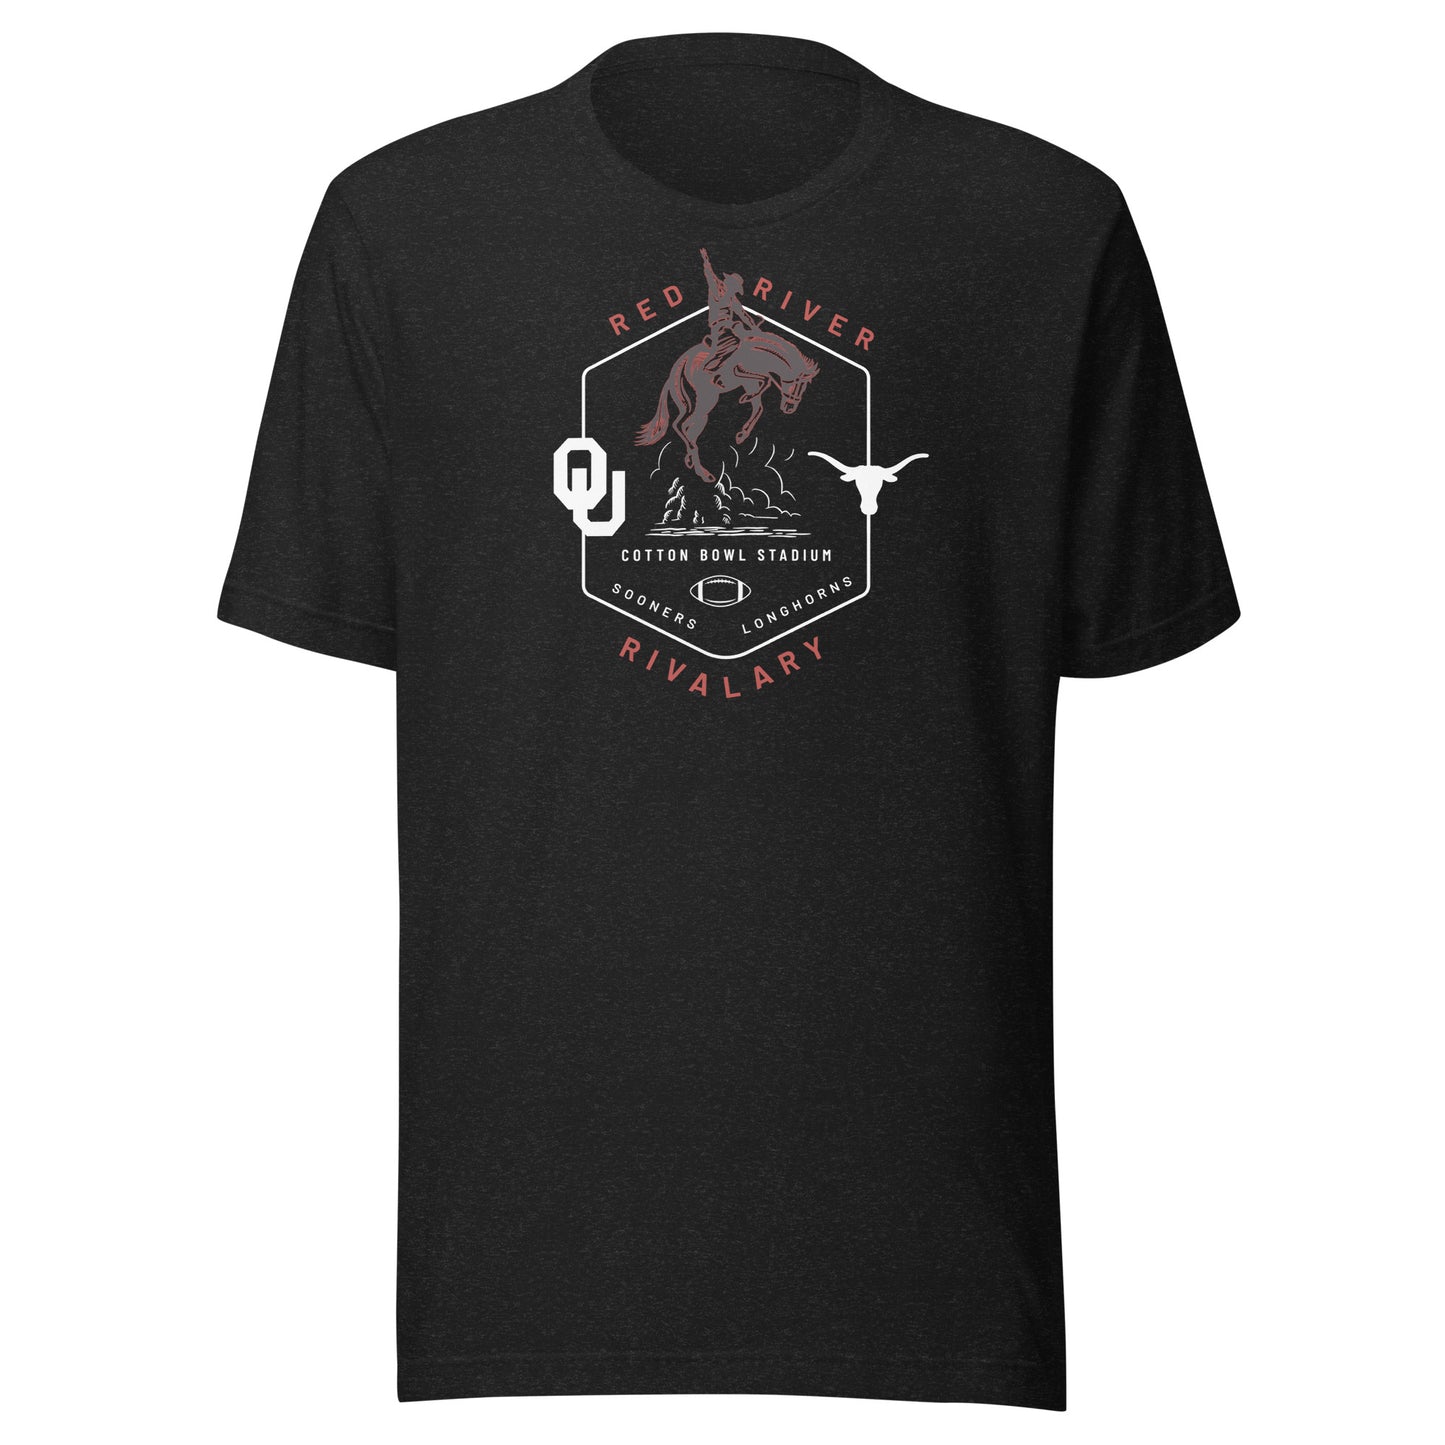 OU vs Texas Red River Rivalry T-shirt